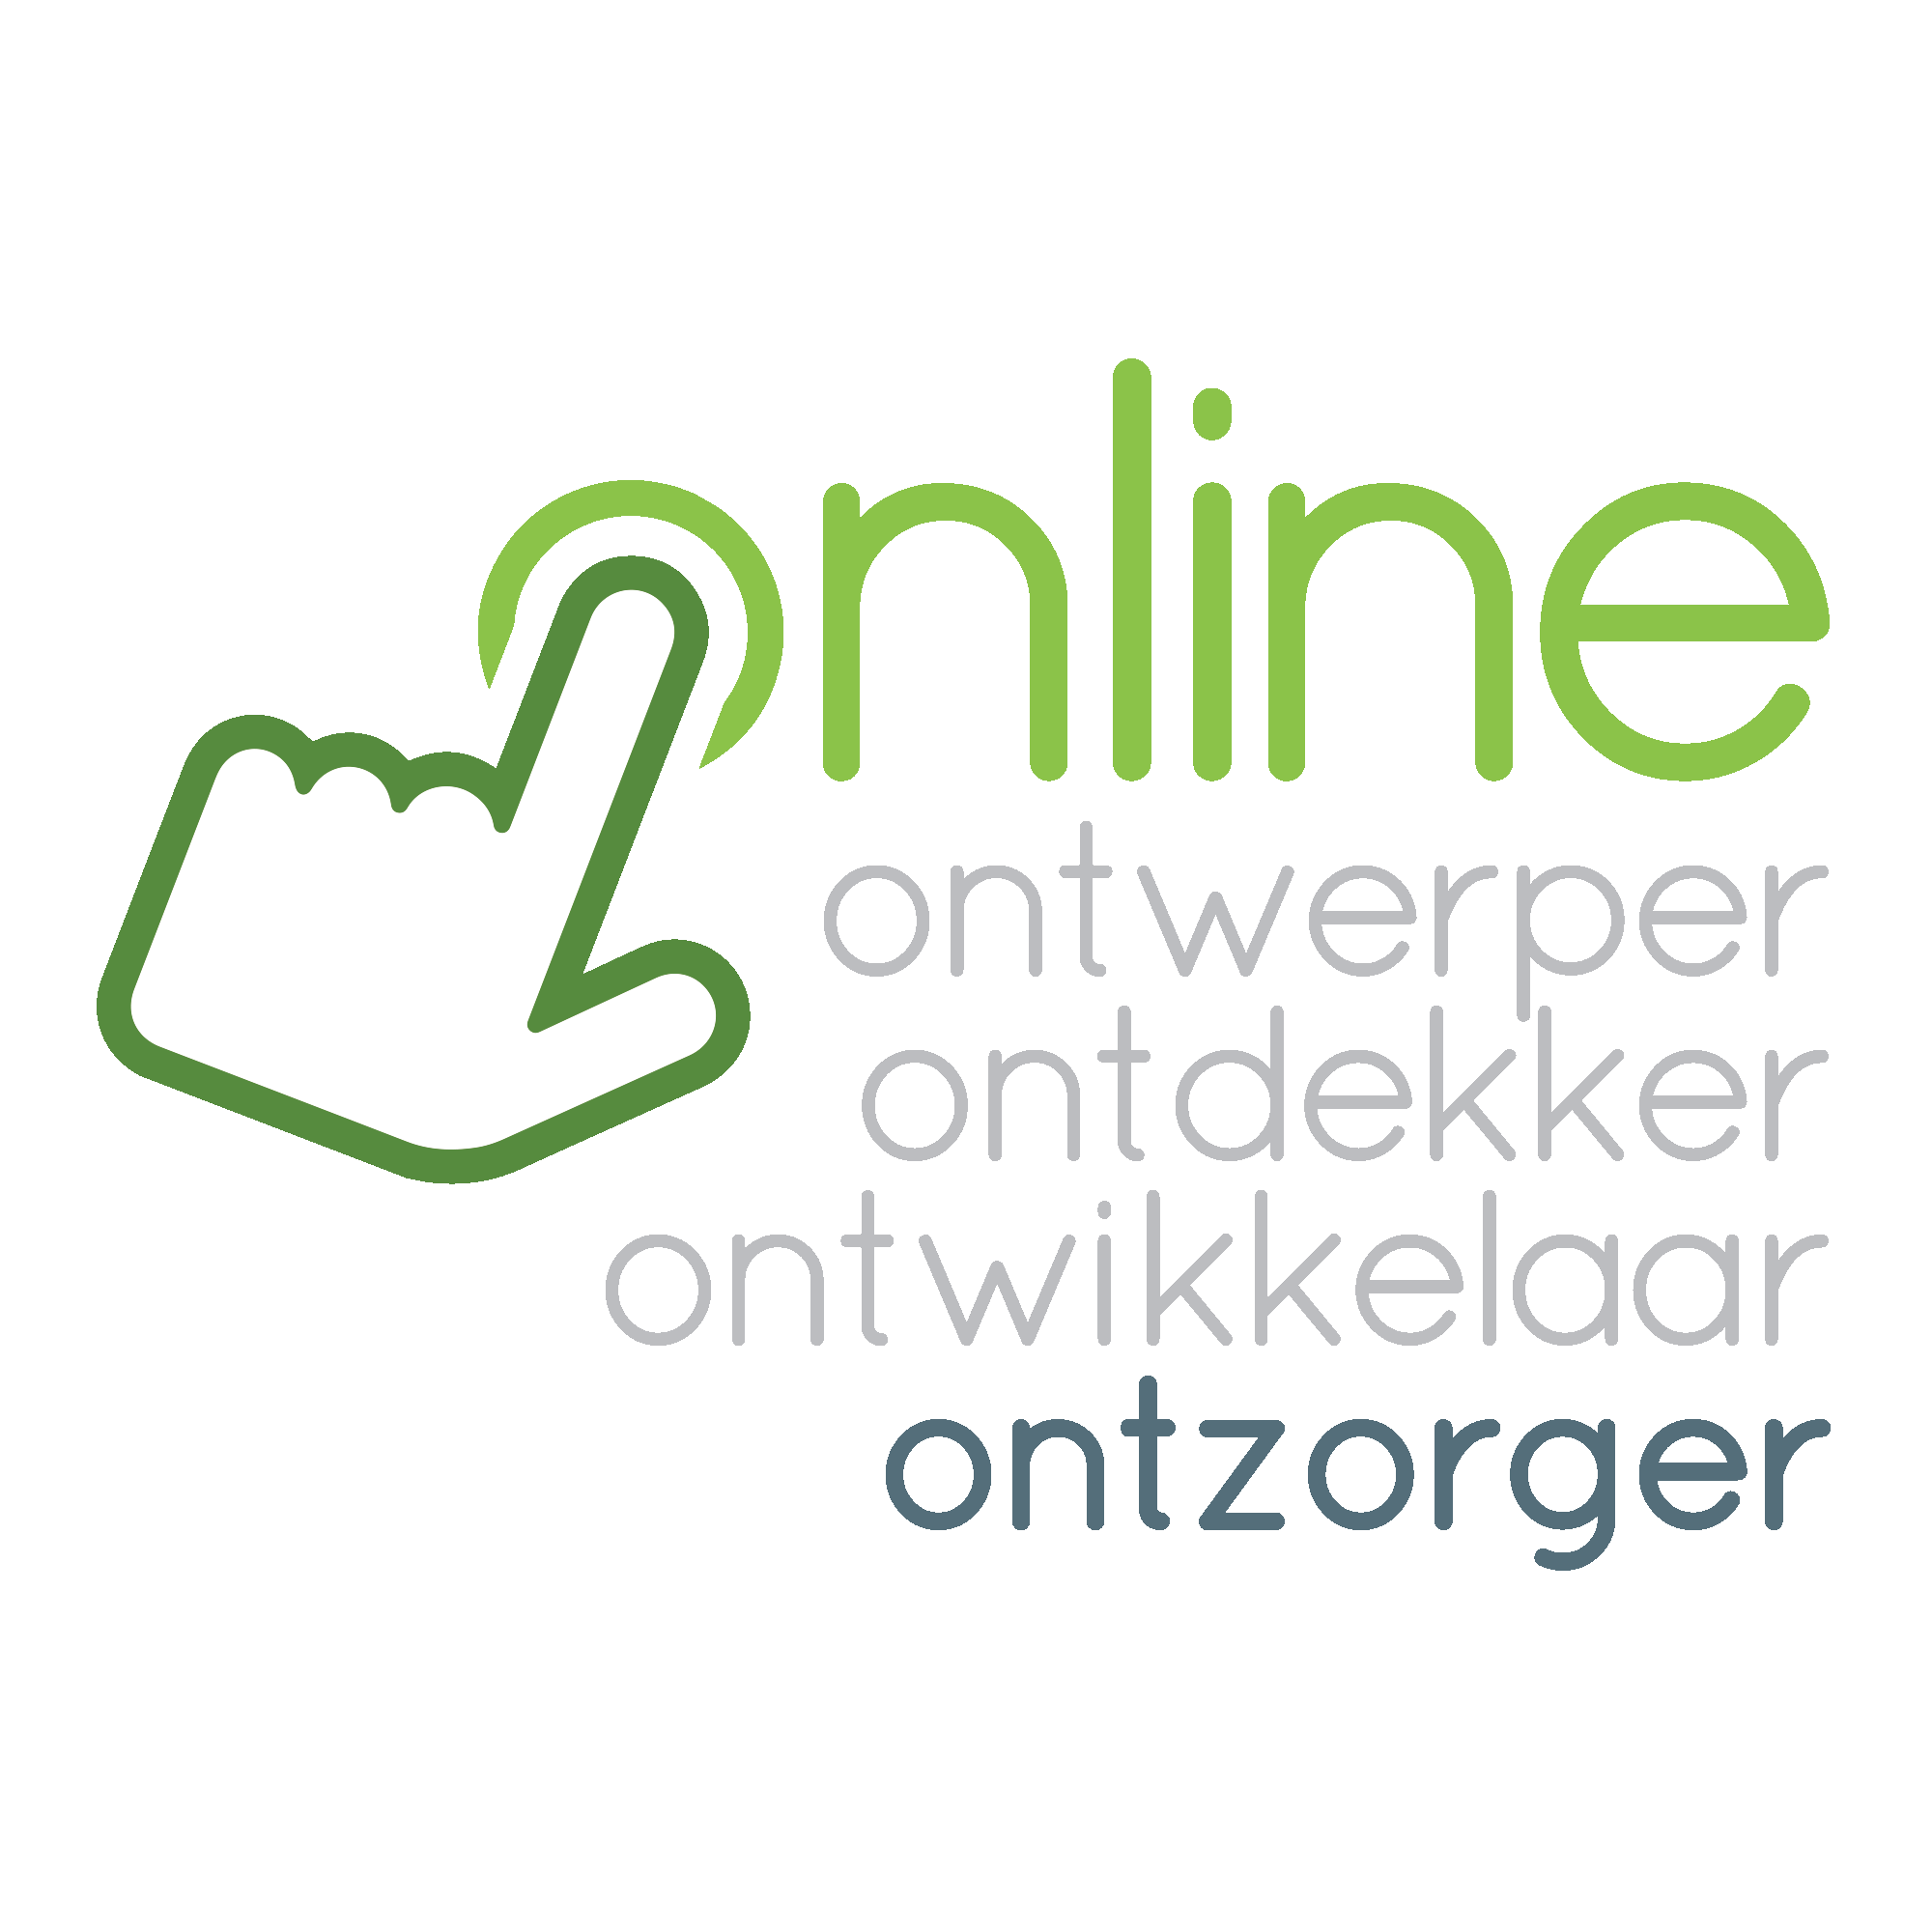 (c) Online-ontzorger.nl